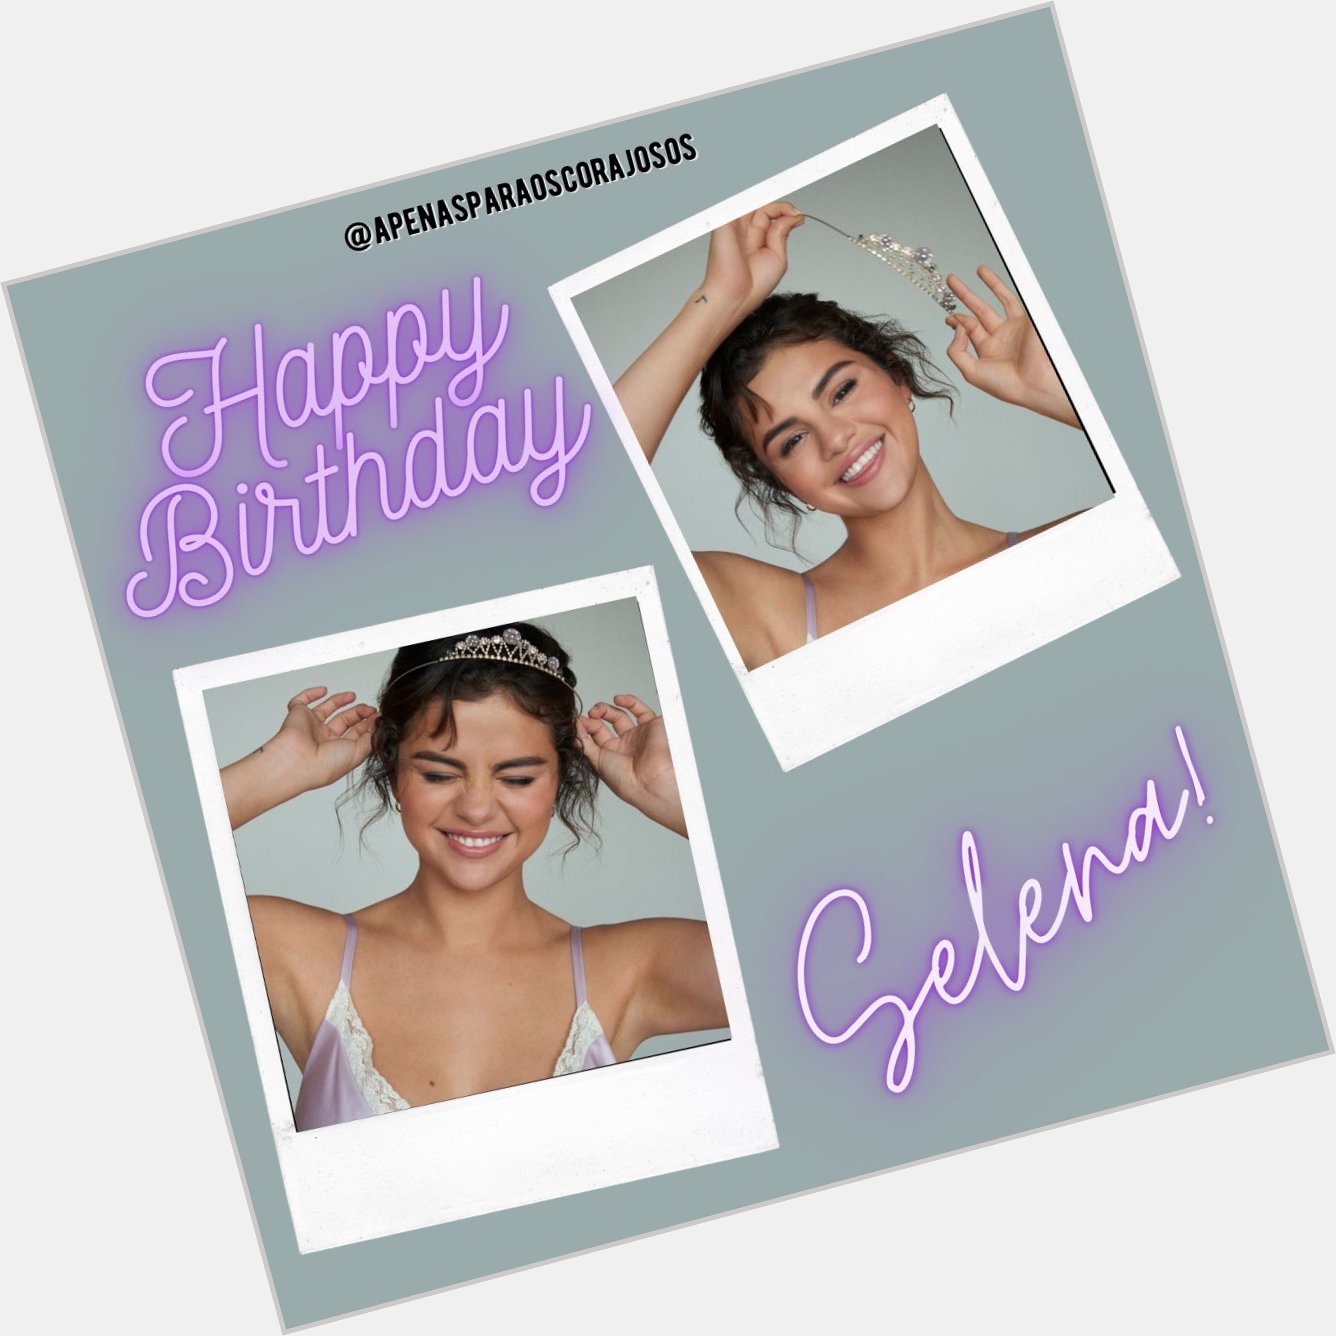 Selena Gomez completa hoje, 29 anos. Parabéns rainha!  HAPPY BIRTHDAY SELENA 